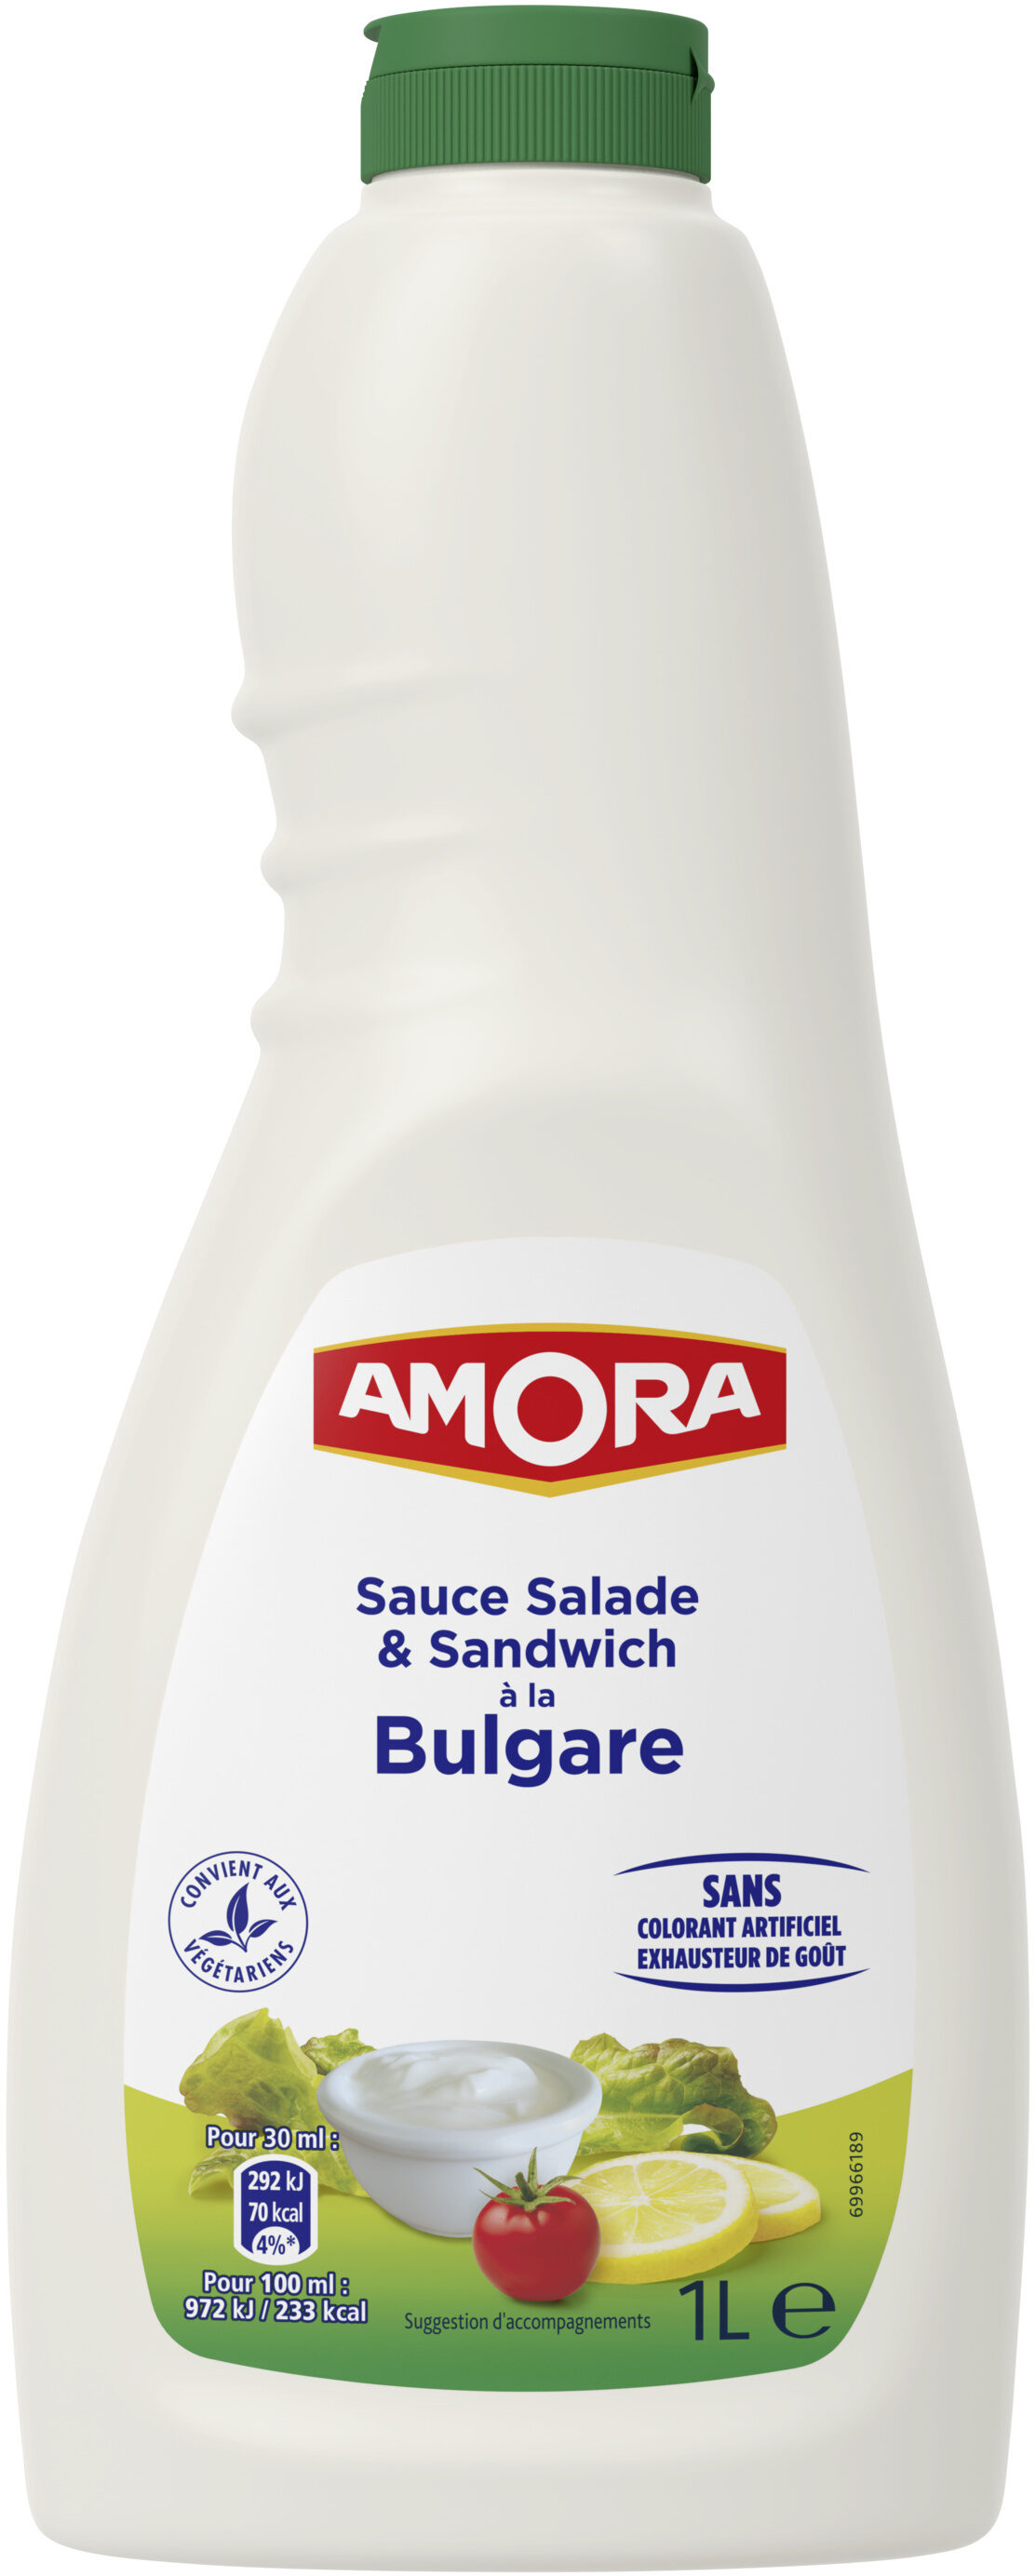 Amora Sauce Salade & Sandwich à la Bulgare 1L - Produit